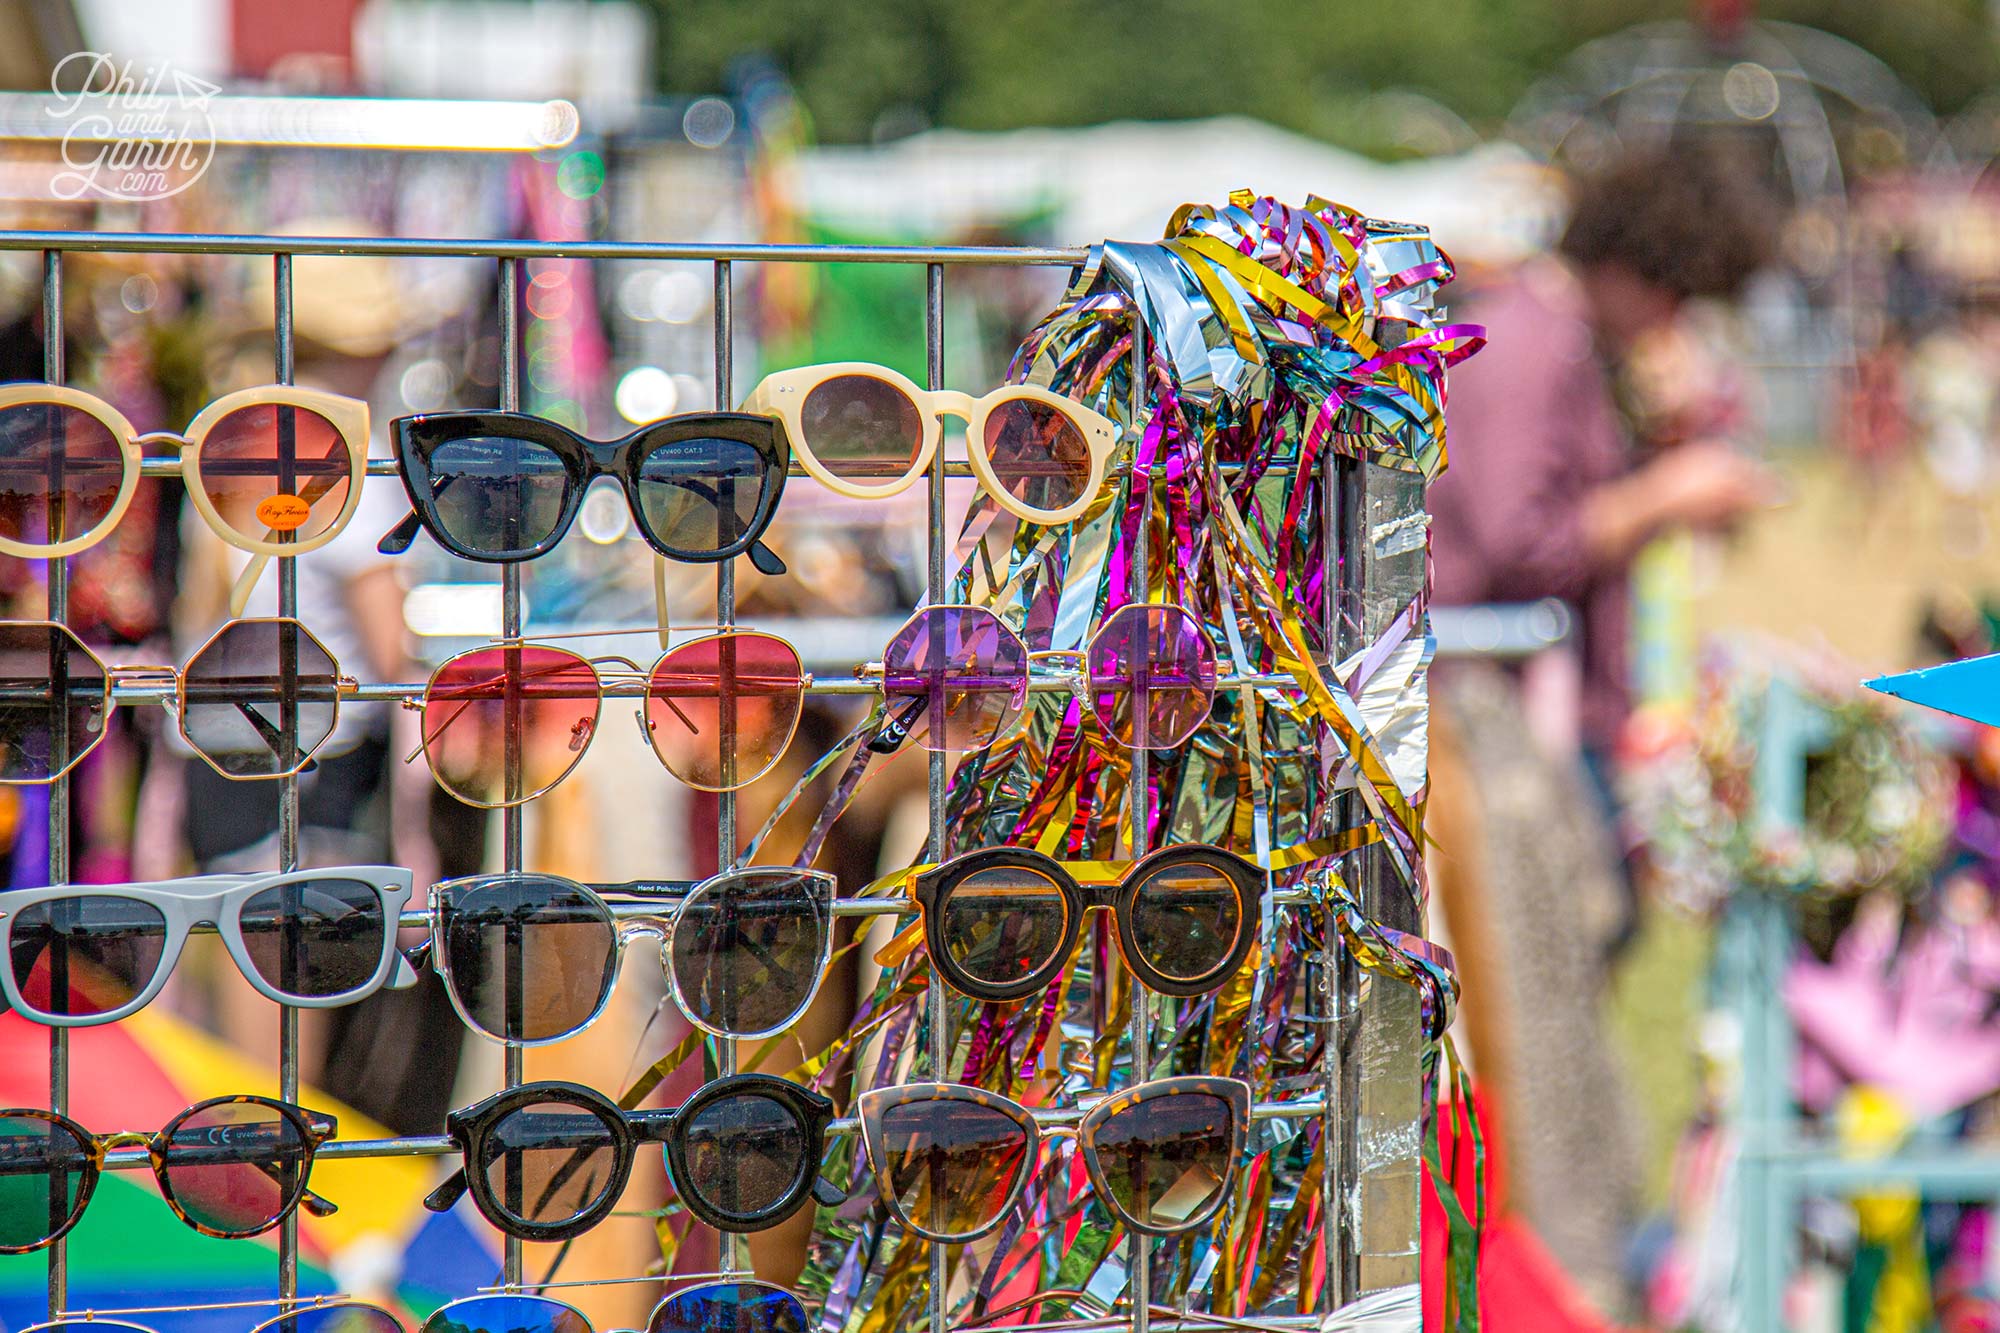 Sunglasses for sale at Glastonbury